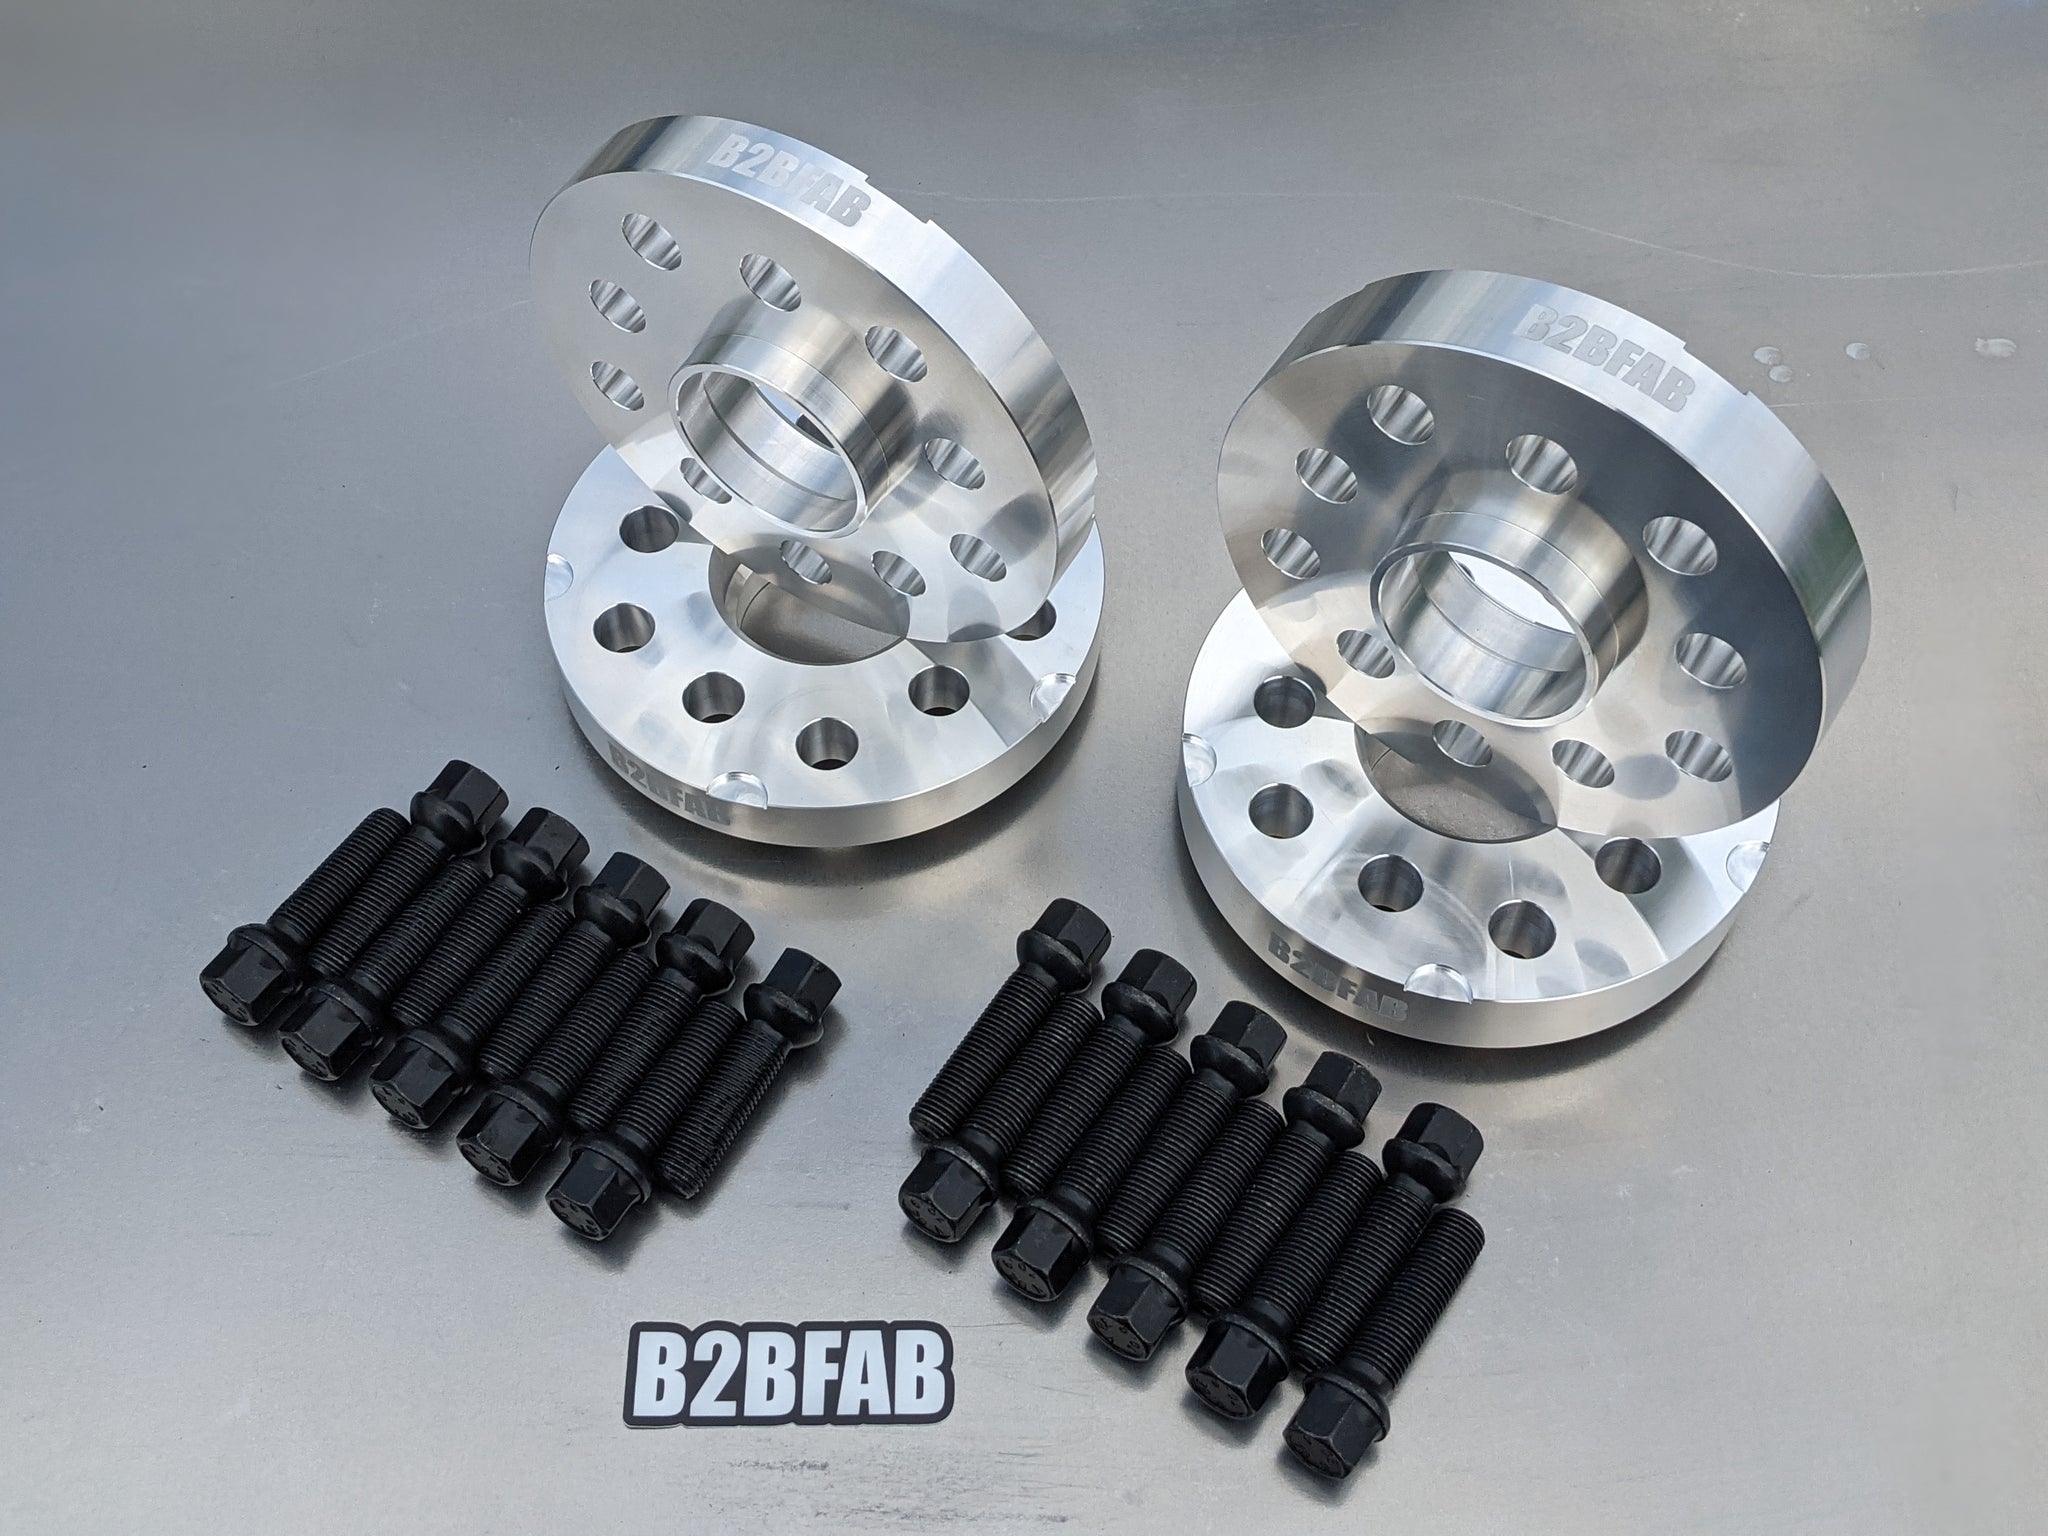 Wheel Spacers Adapters 25mm 5x100 - 5x120